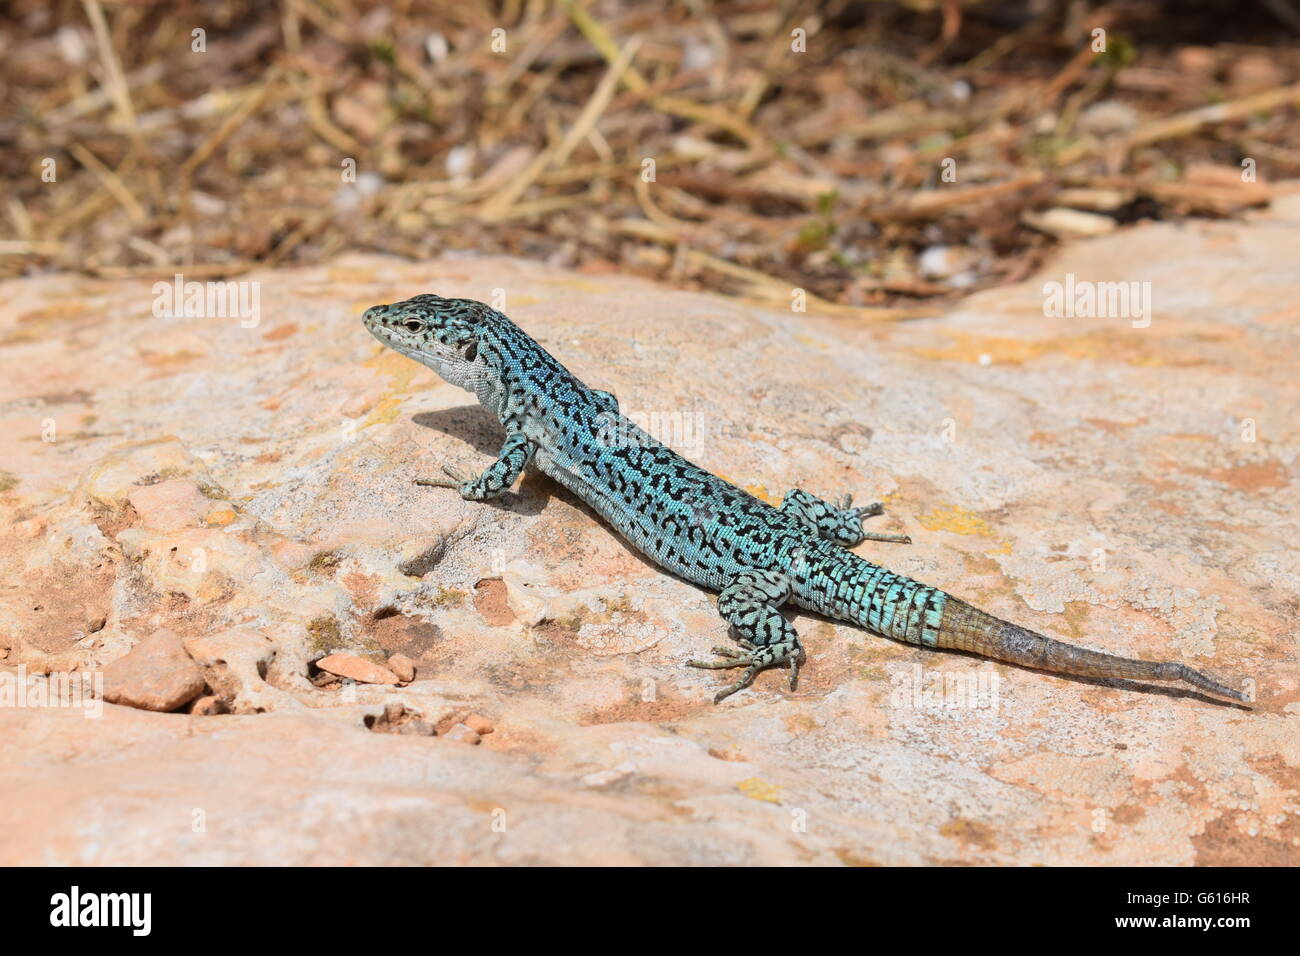 Podarcis Pityusensis Formenterae lizard resting on stone with darker coloured tail Stock Photo